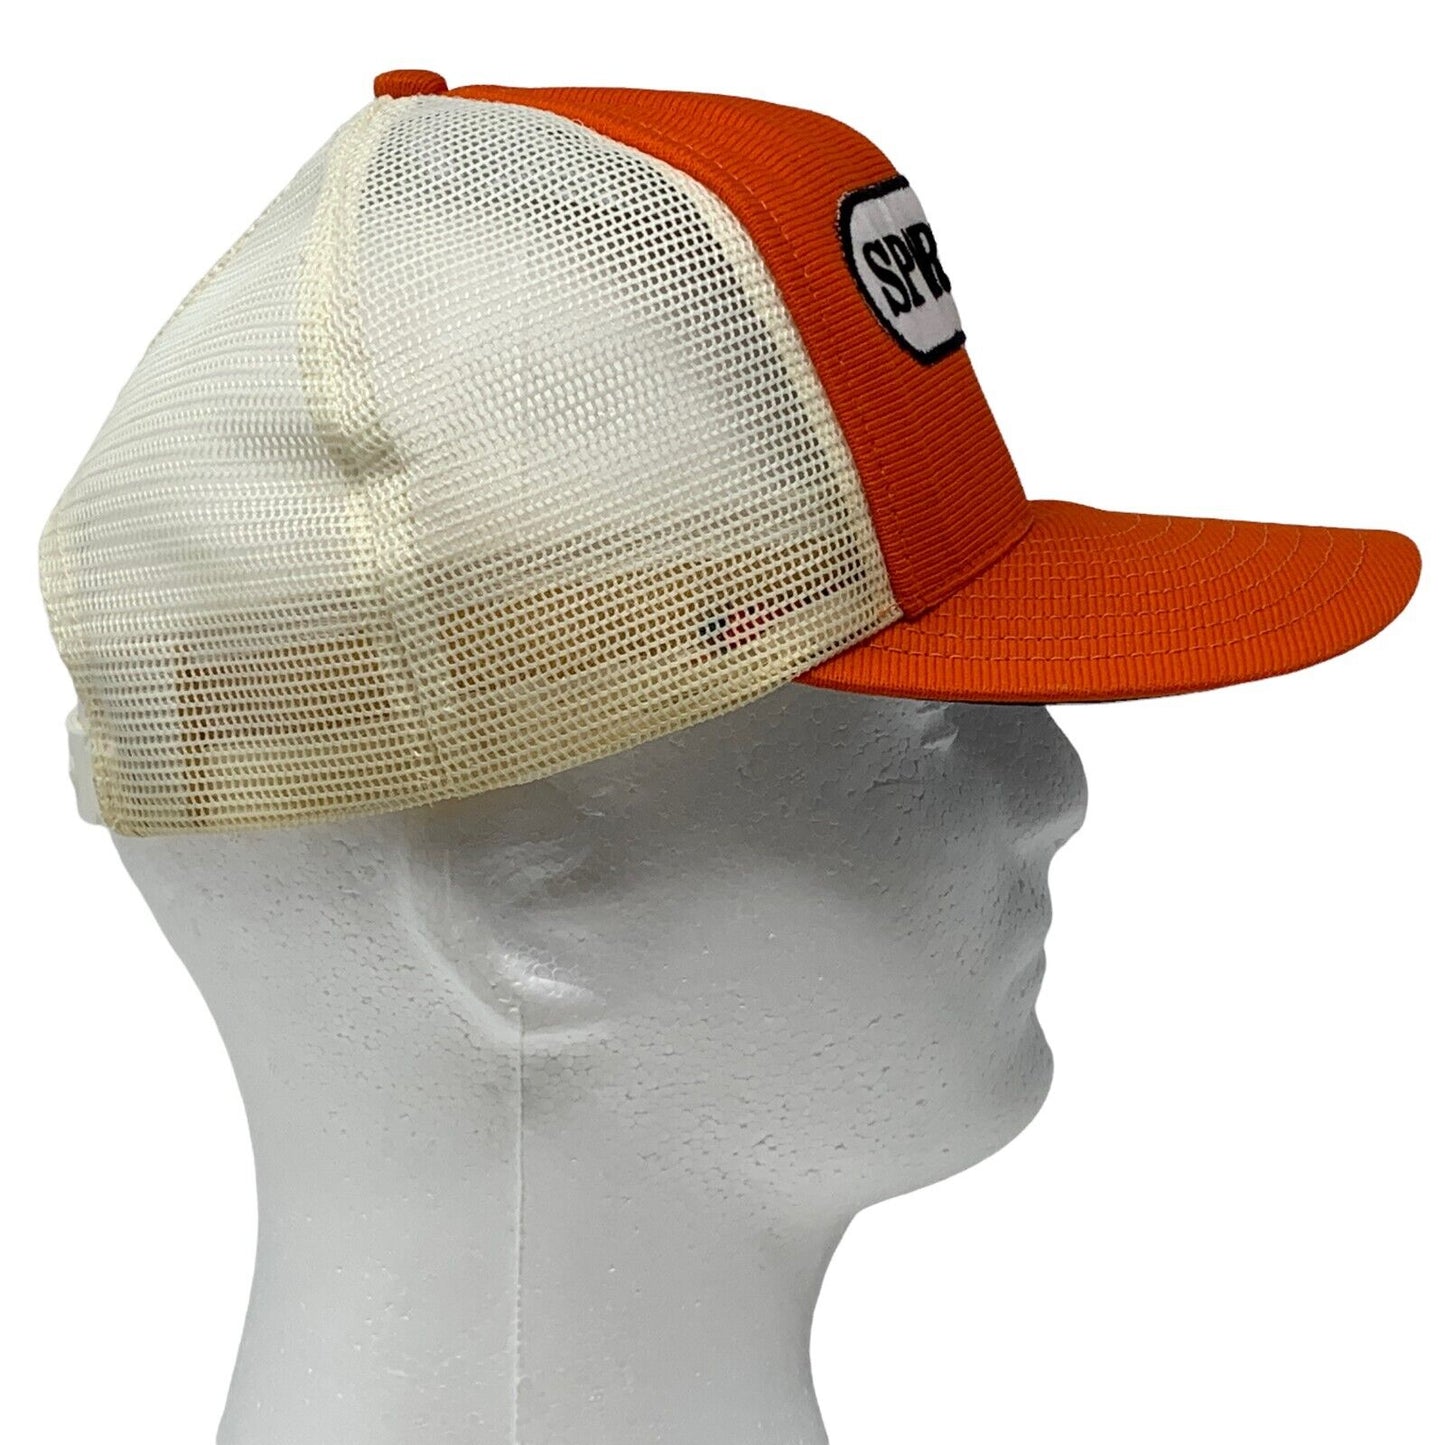 Sportsmans Snapback Trucker Hat Vintage 80s Made In USA Orange Mesh Baseball Cap